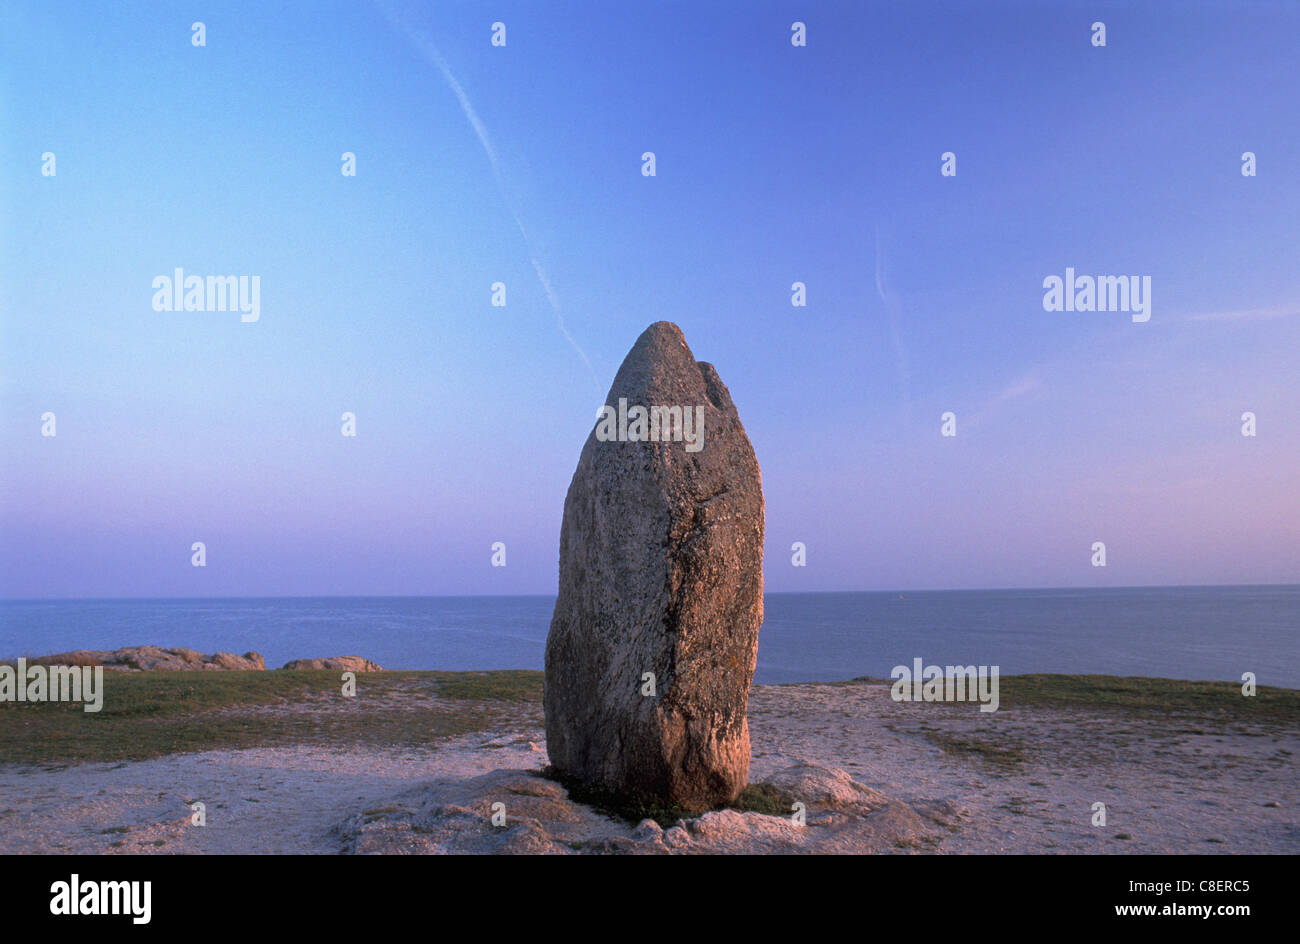 Menhir, sea, Le Croisic, Brittany, Bretagne, France, Europe, stone, megalith Stock Photo